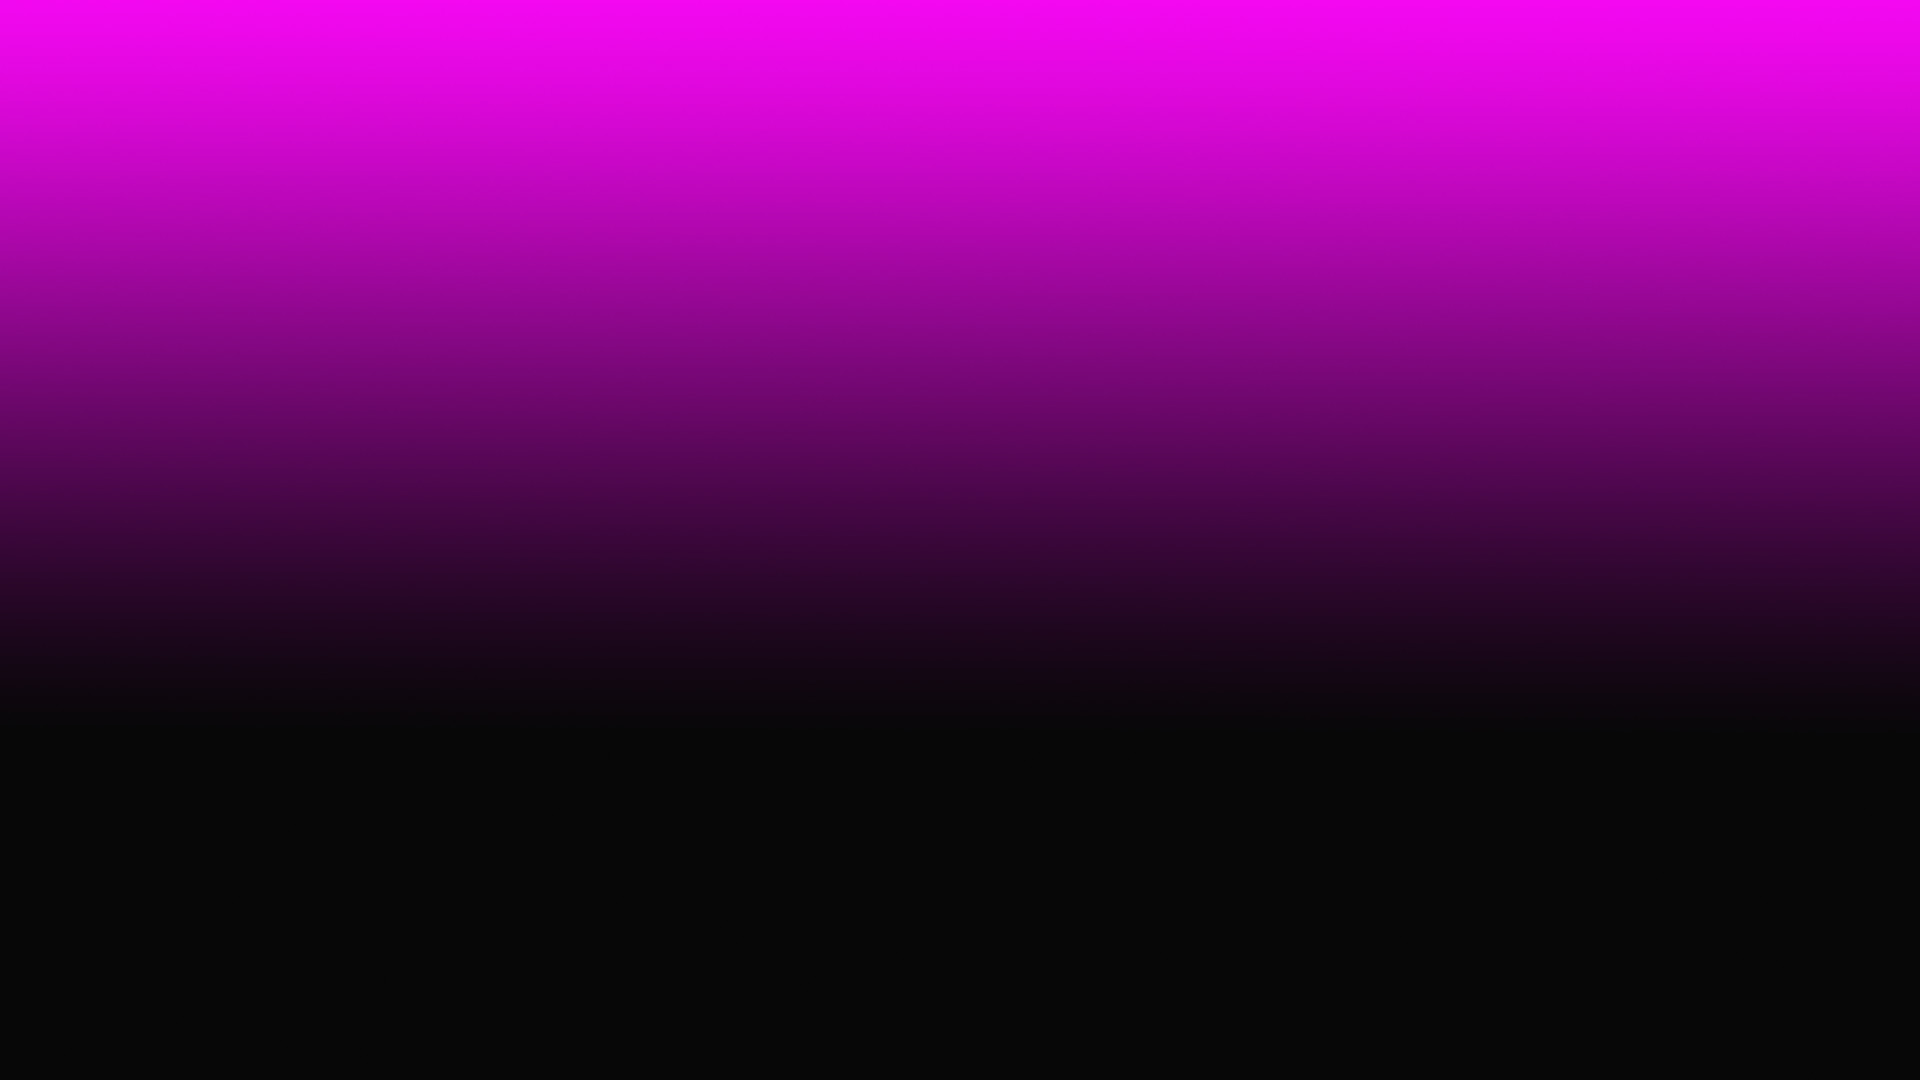 1920x1080 Pink Black Gradient 